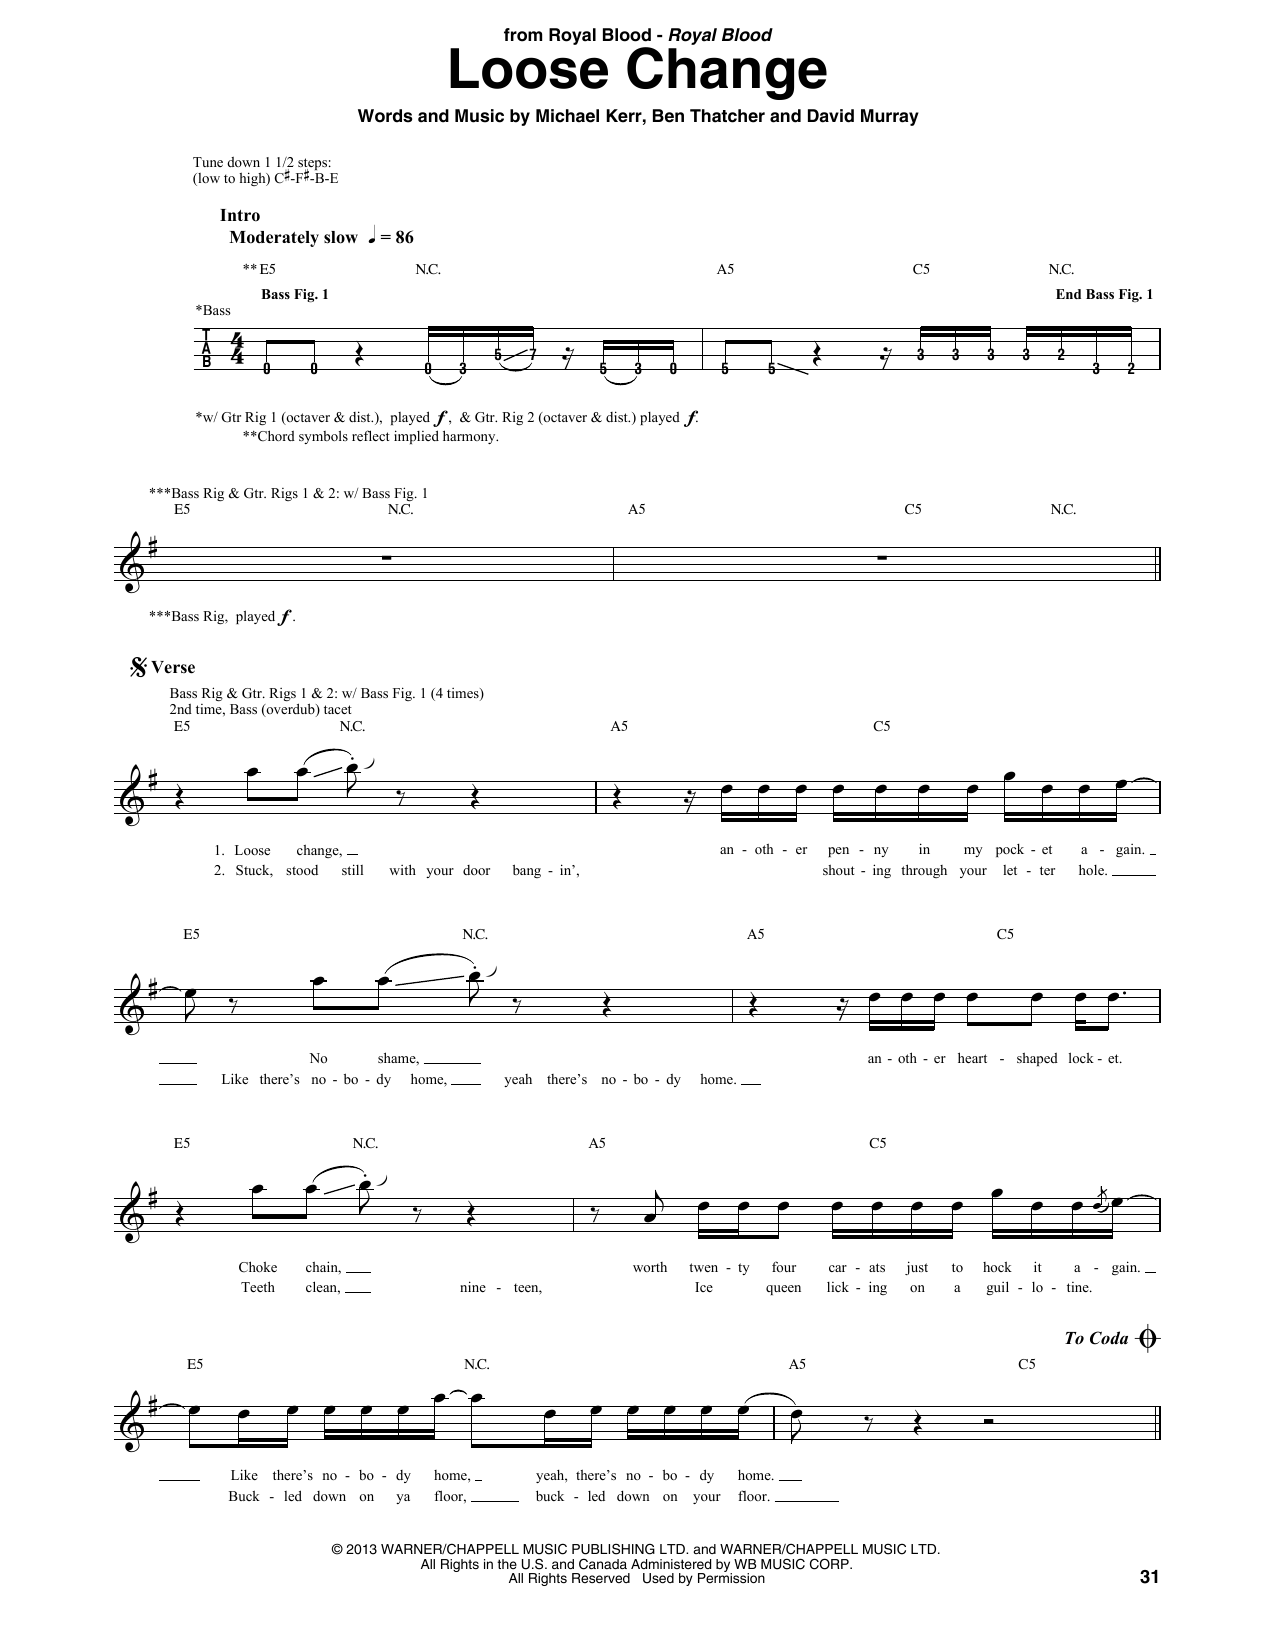 Royal Blood Loose Change Sheet Music Notes & Chords for Bass Guitar Tab - Download or Print PDF